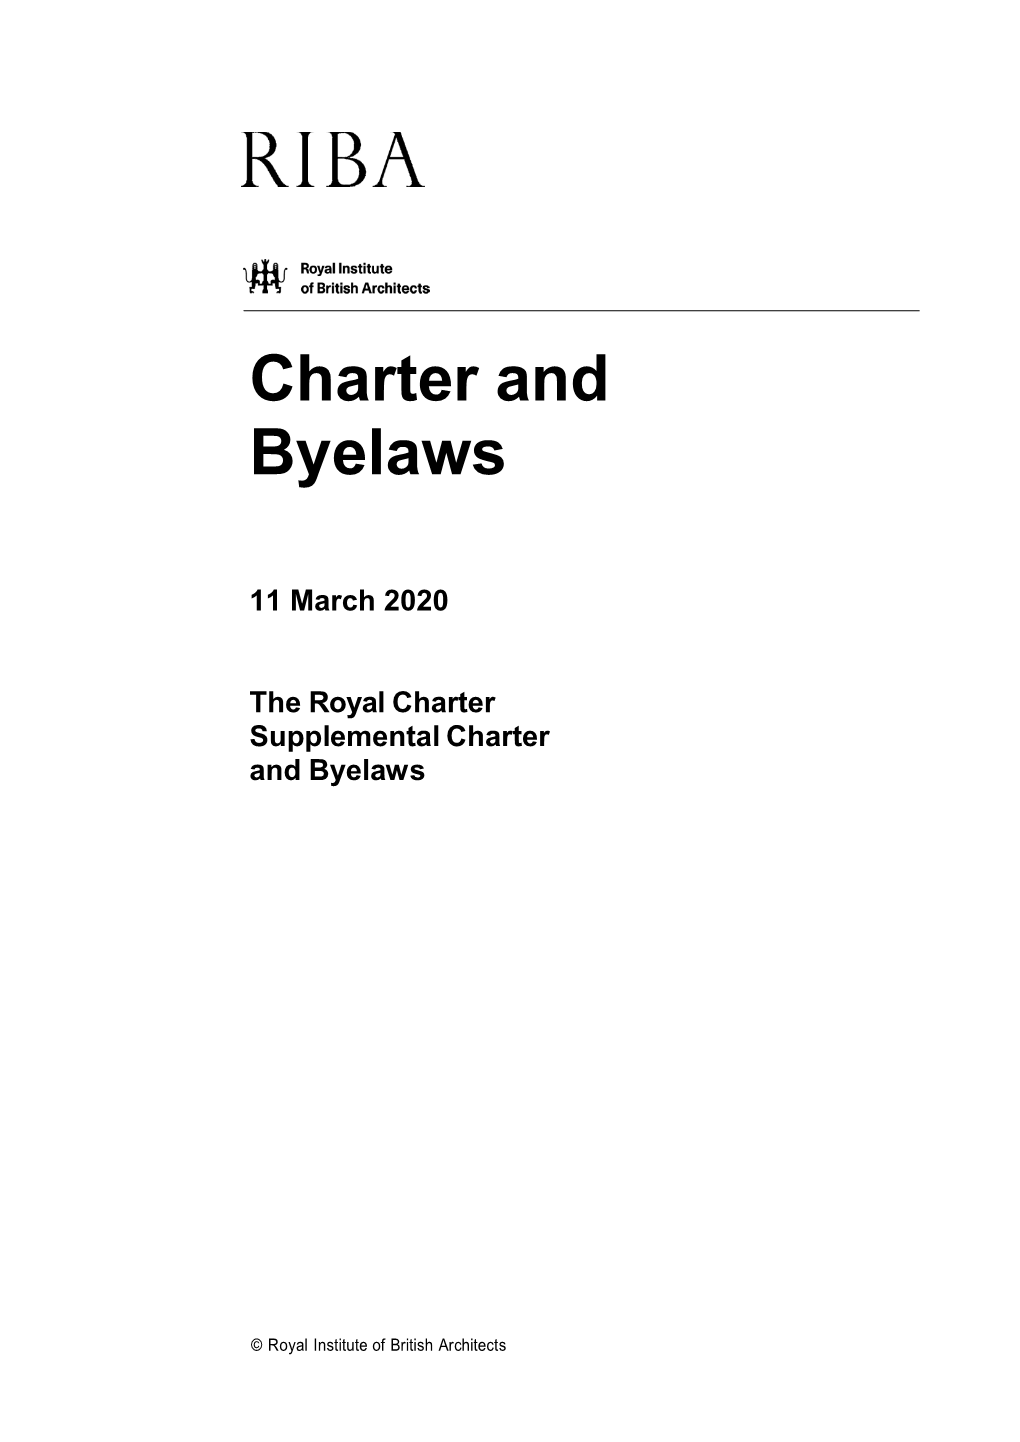 Royal Charter and Byelaws